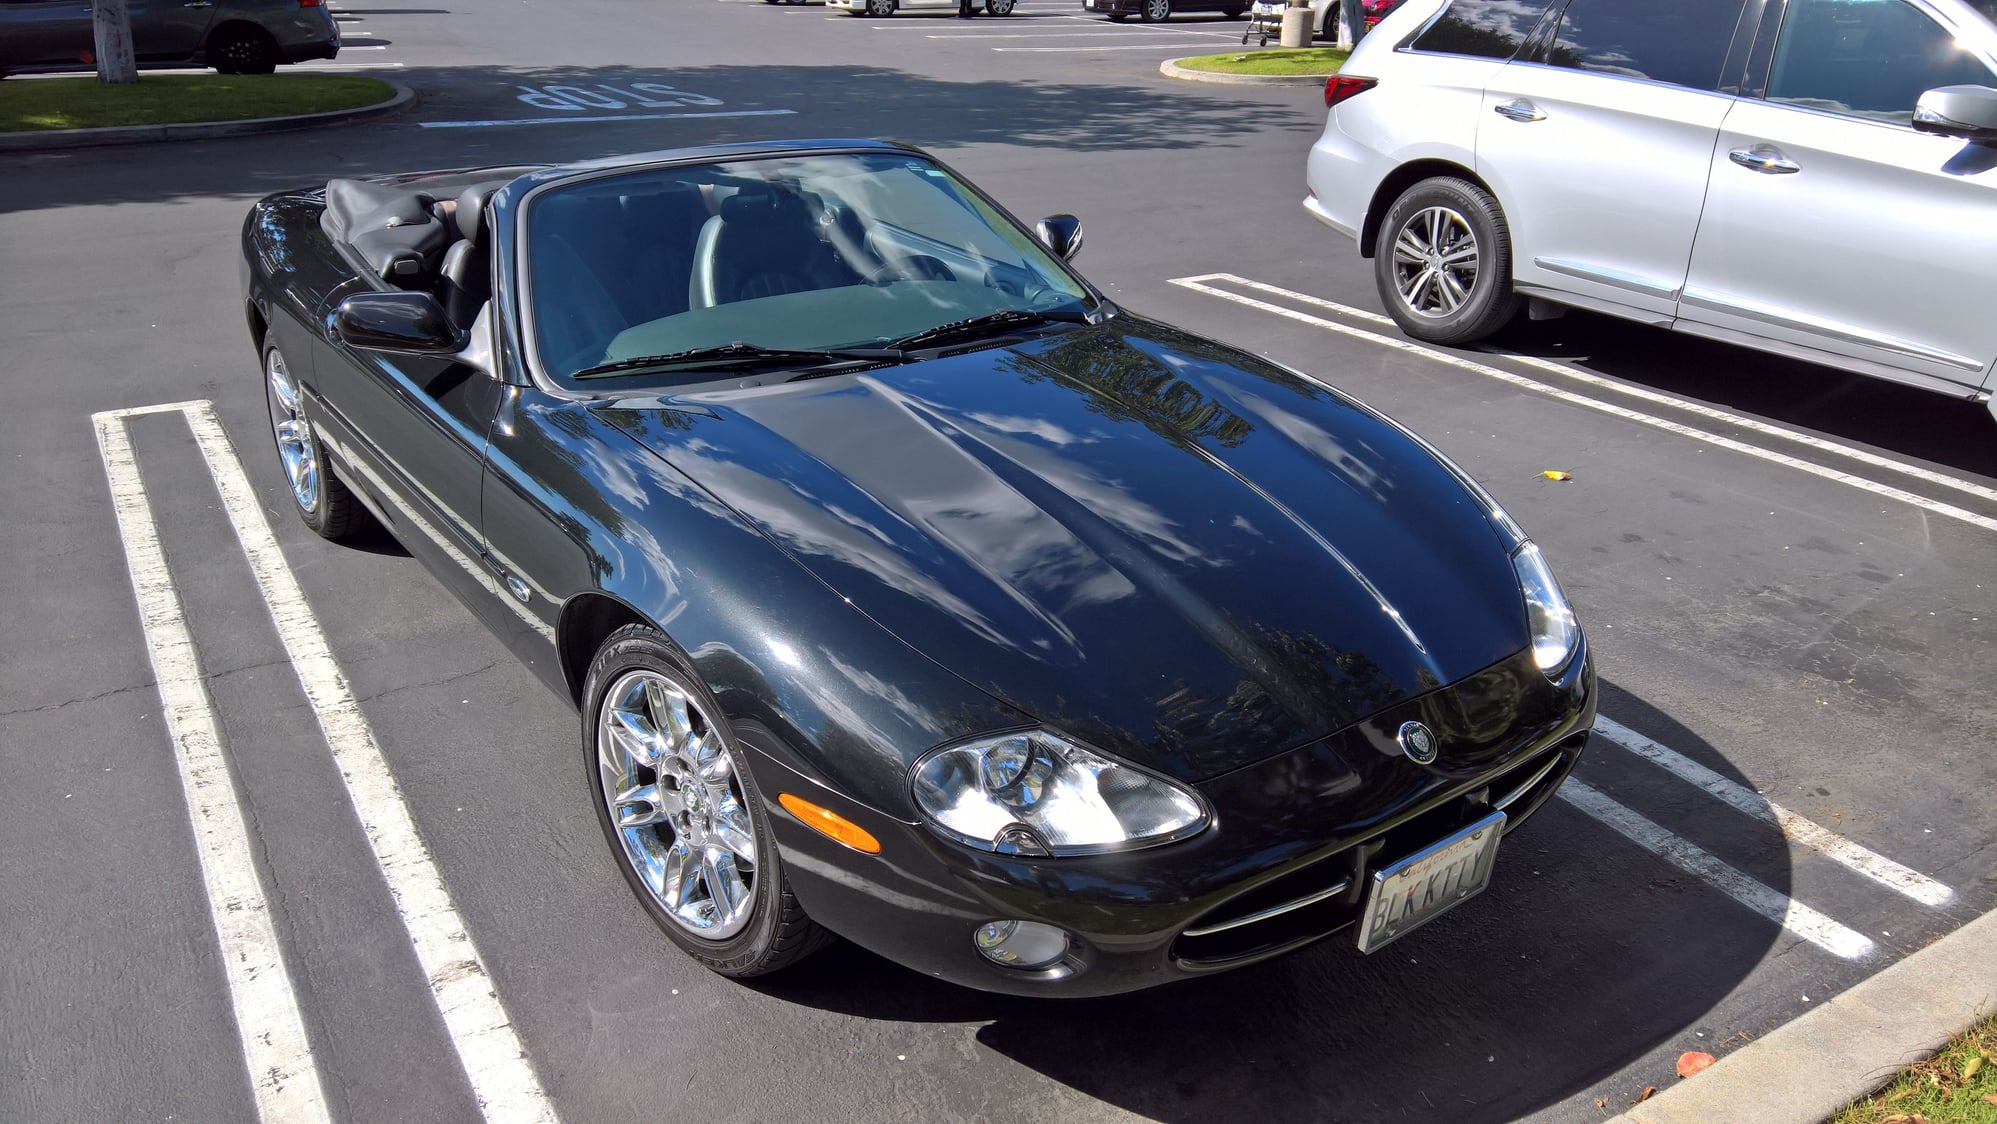 2001 Jaguar XK8 - Very low mileage triple black XK8 - Used - VIN SAJDA42C21NA17145 - 65,600 Miles - 8 cyl - 2WD - Automatic - Convertible - Black - Culver City, Ca, CA 90230, United States